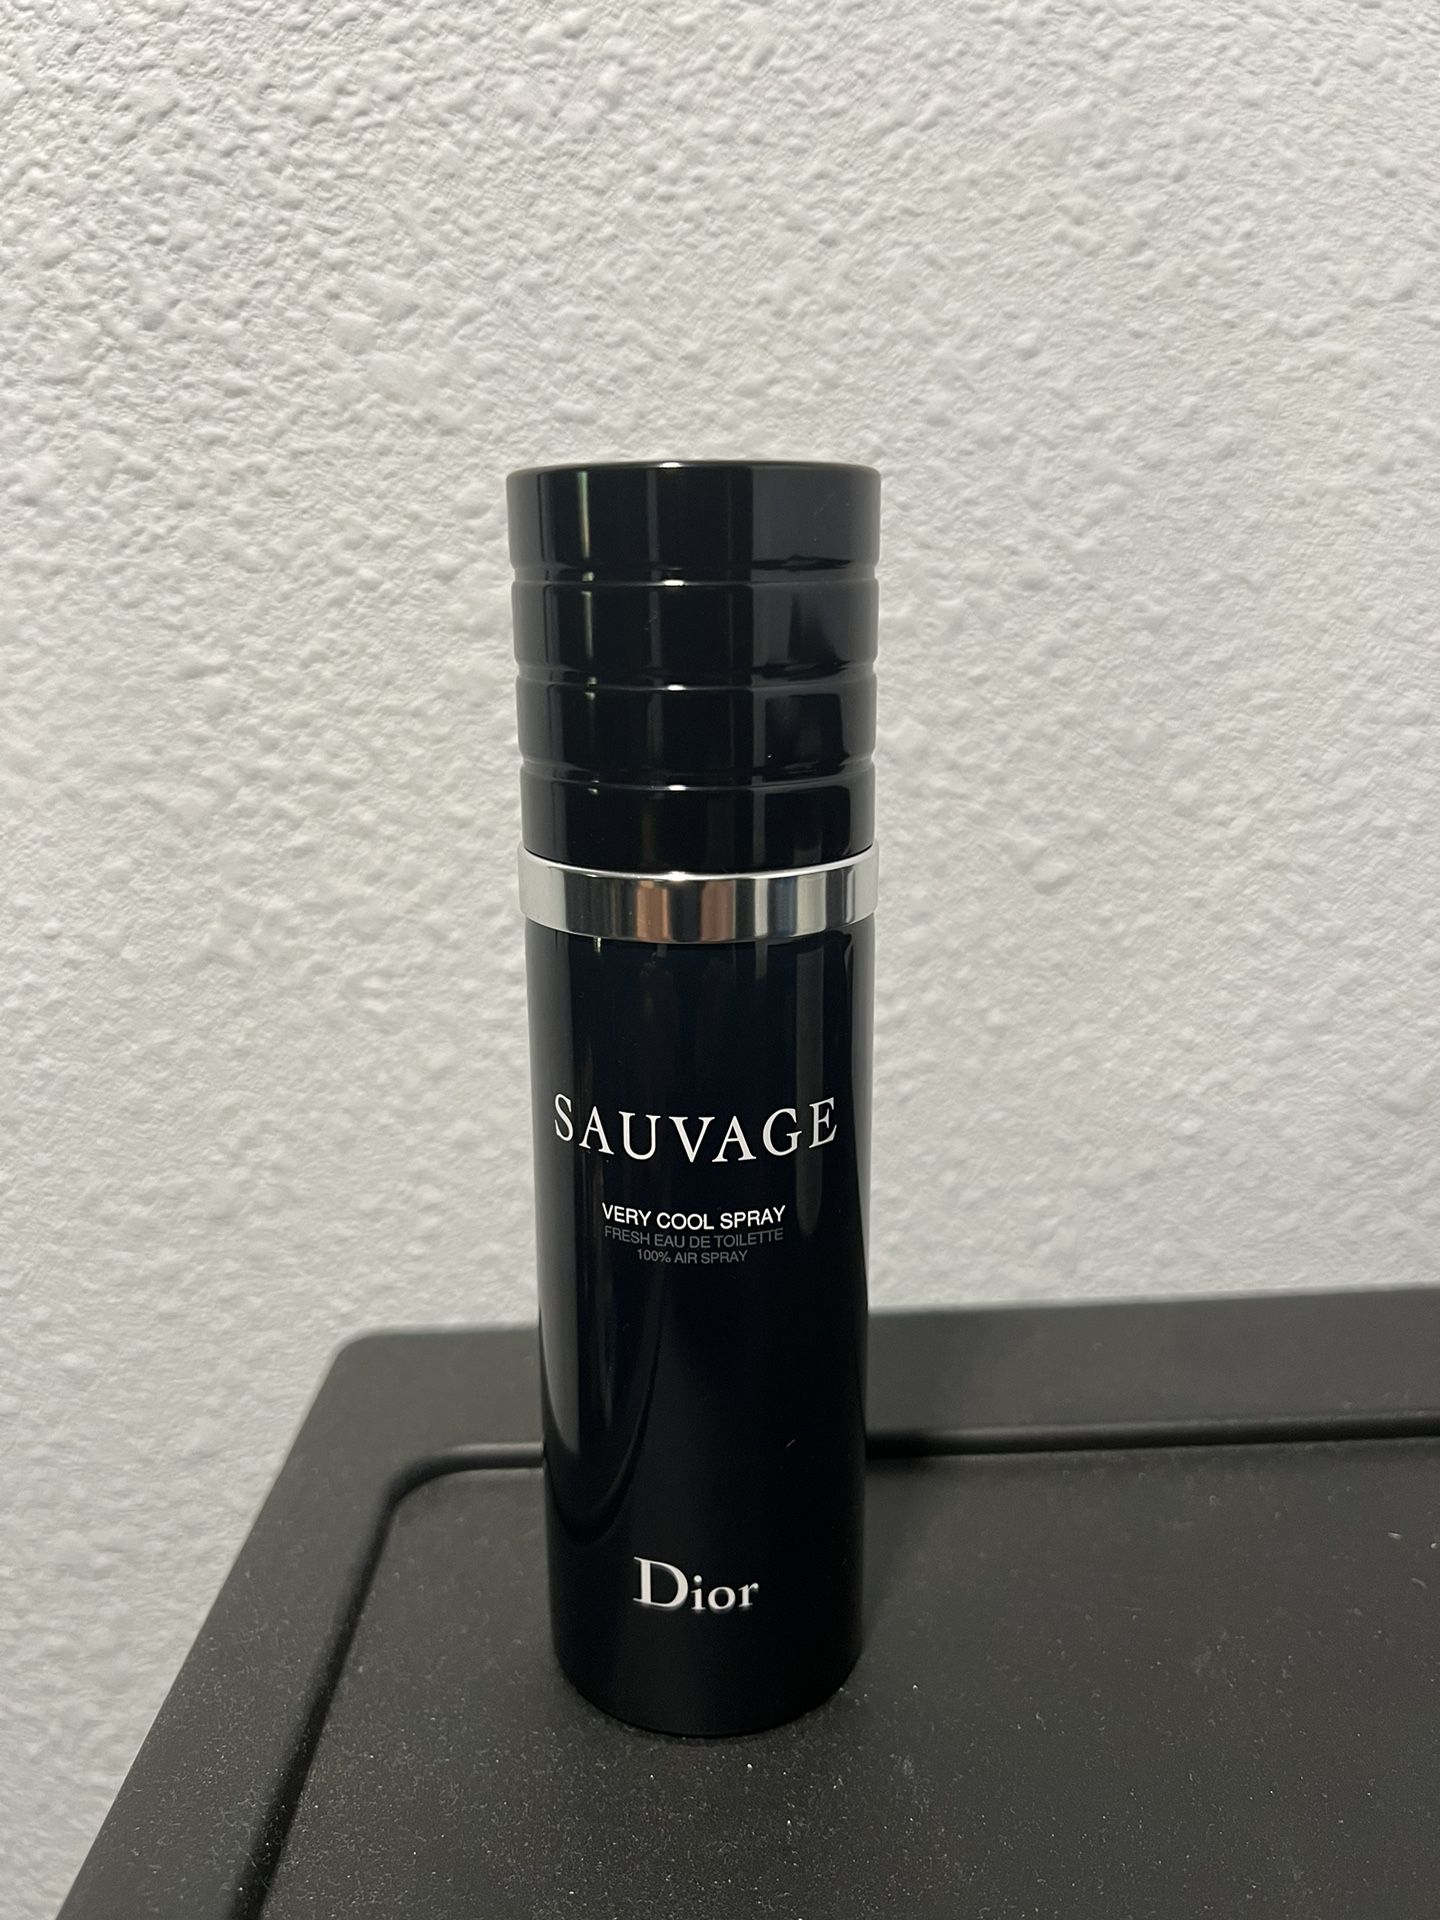 Dior Sauvage Very Cool Spray Eau De Toilette